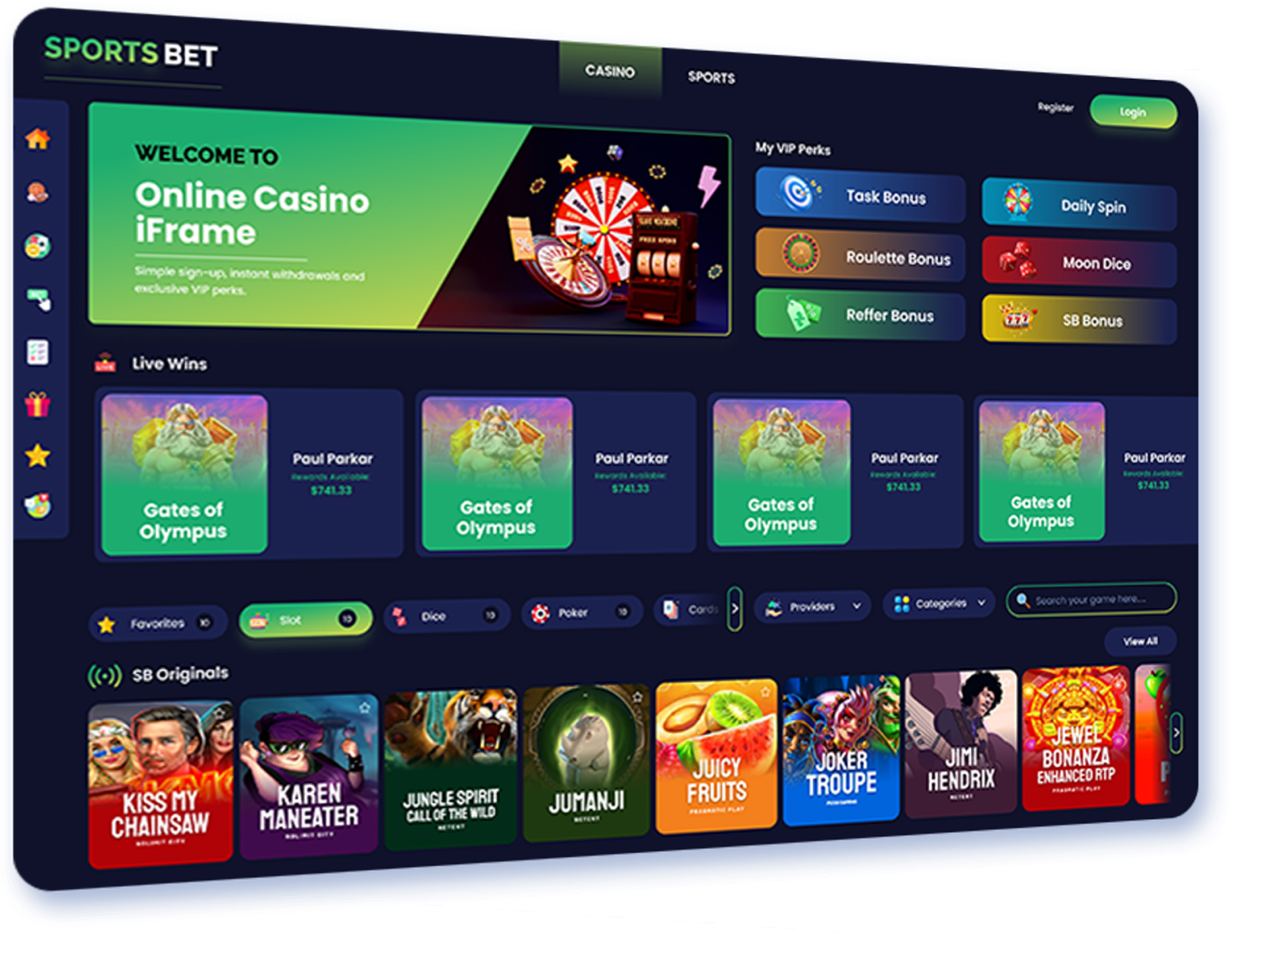 Online Casino iFrame